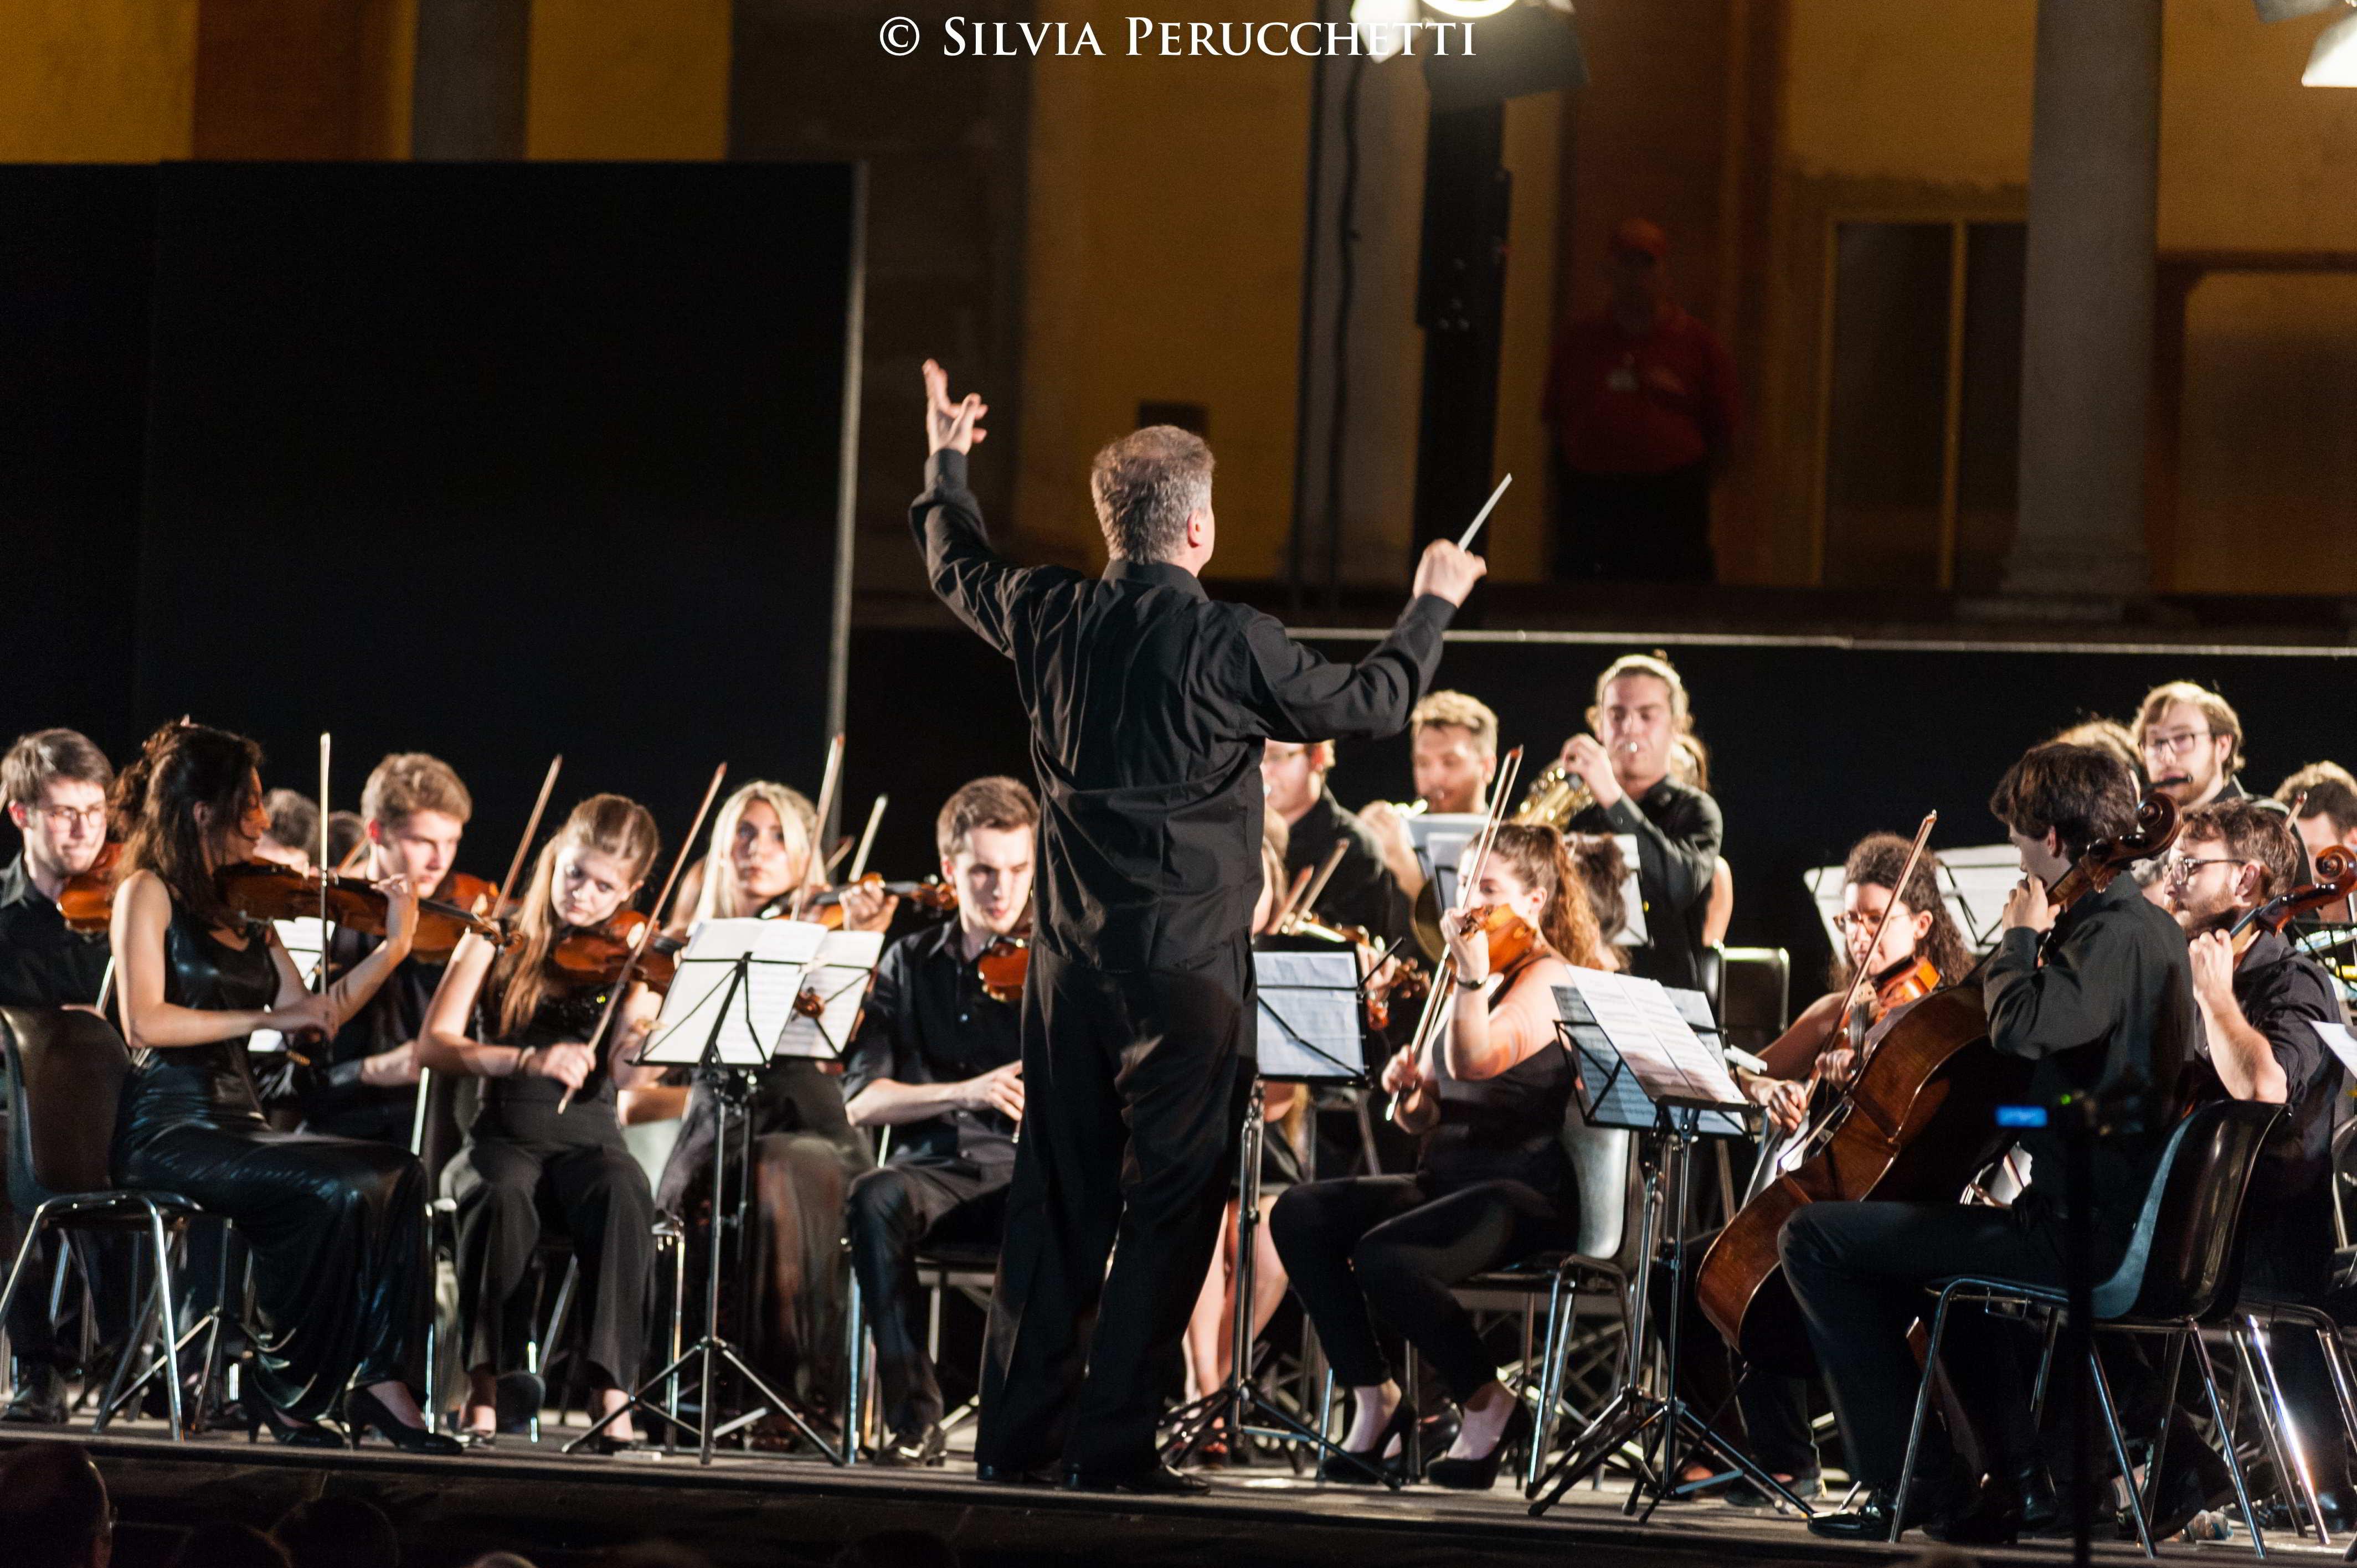 Orchestra AFAM Istituto Peri Merulo7 foto 2016